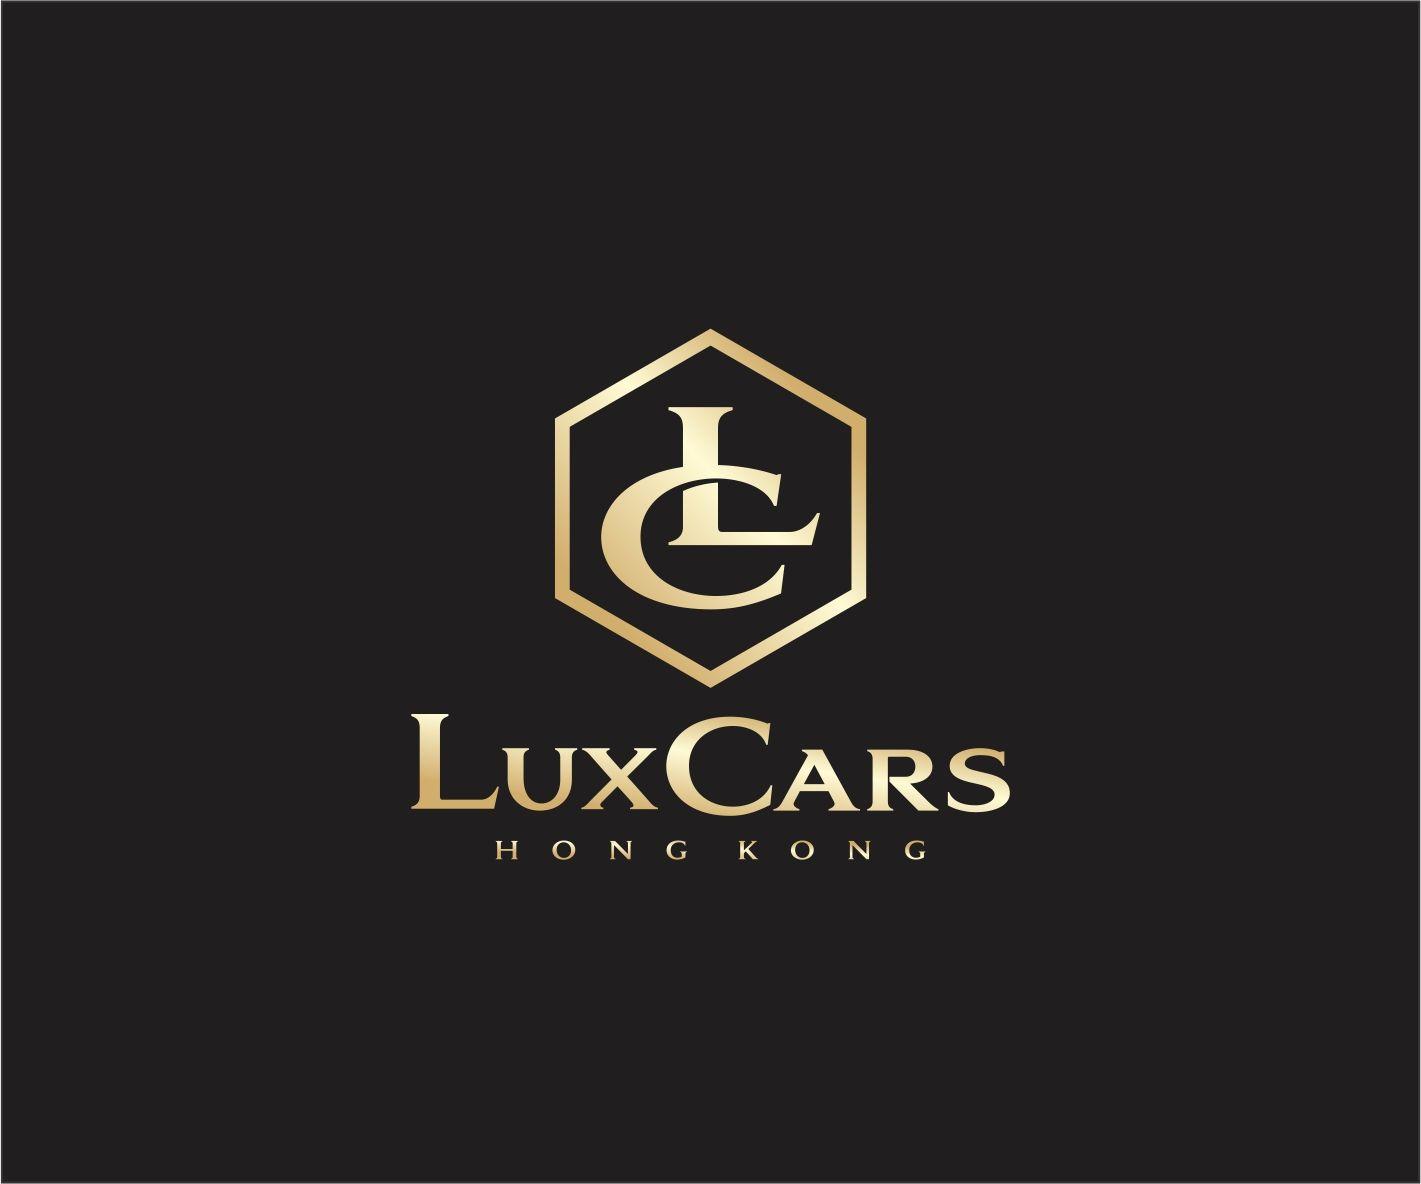 Luxuary Car Logo - Professional, Upmarket, It Company Logo Design for LuxCars